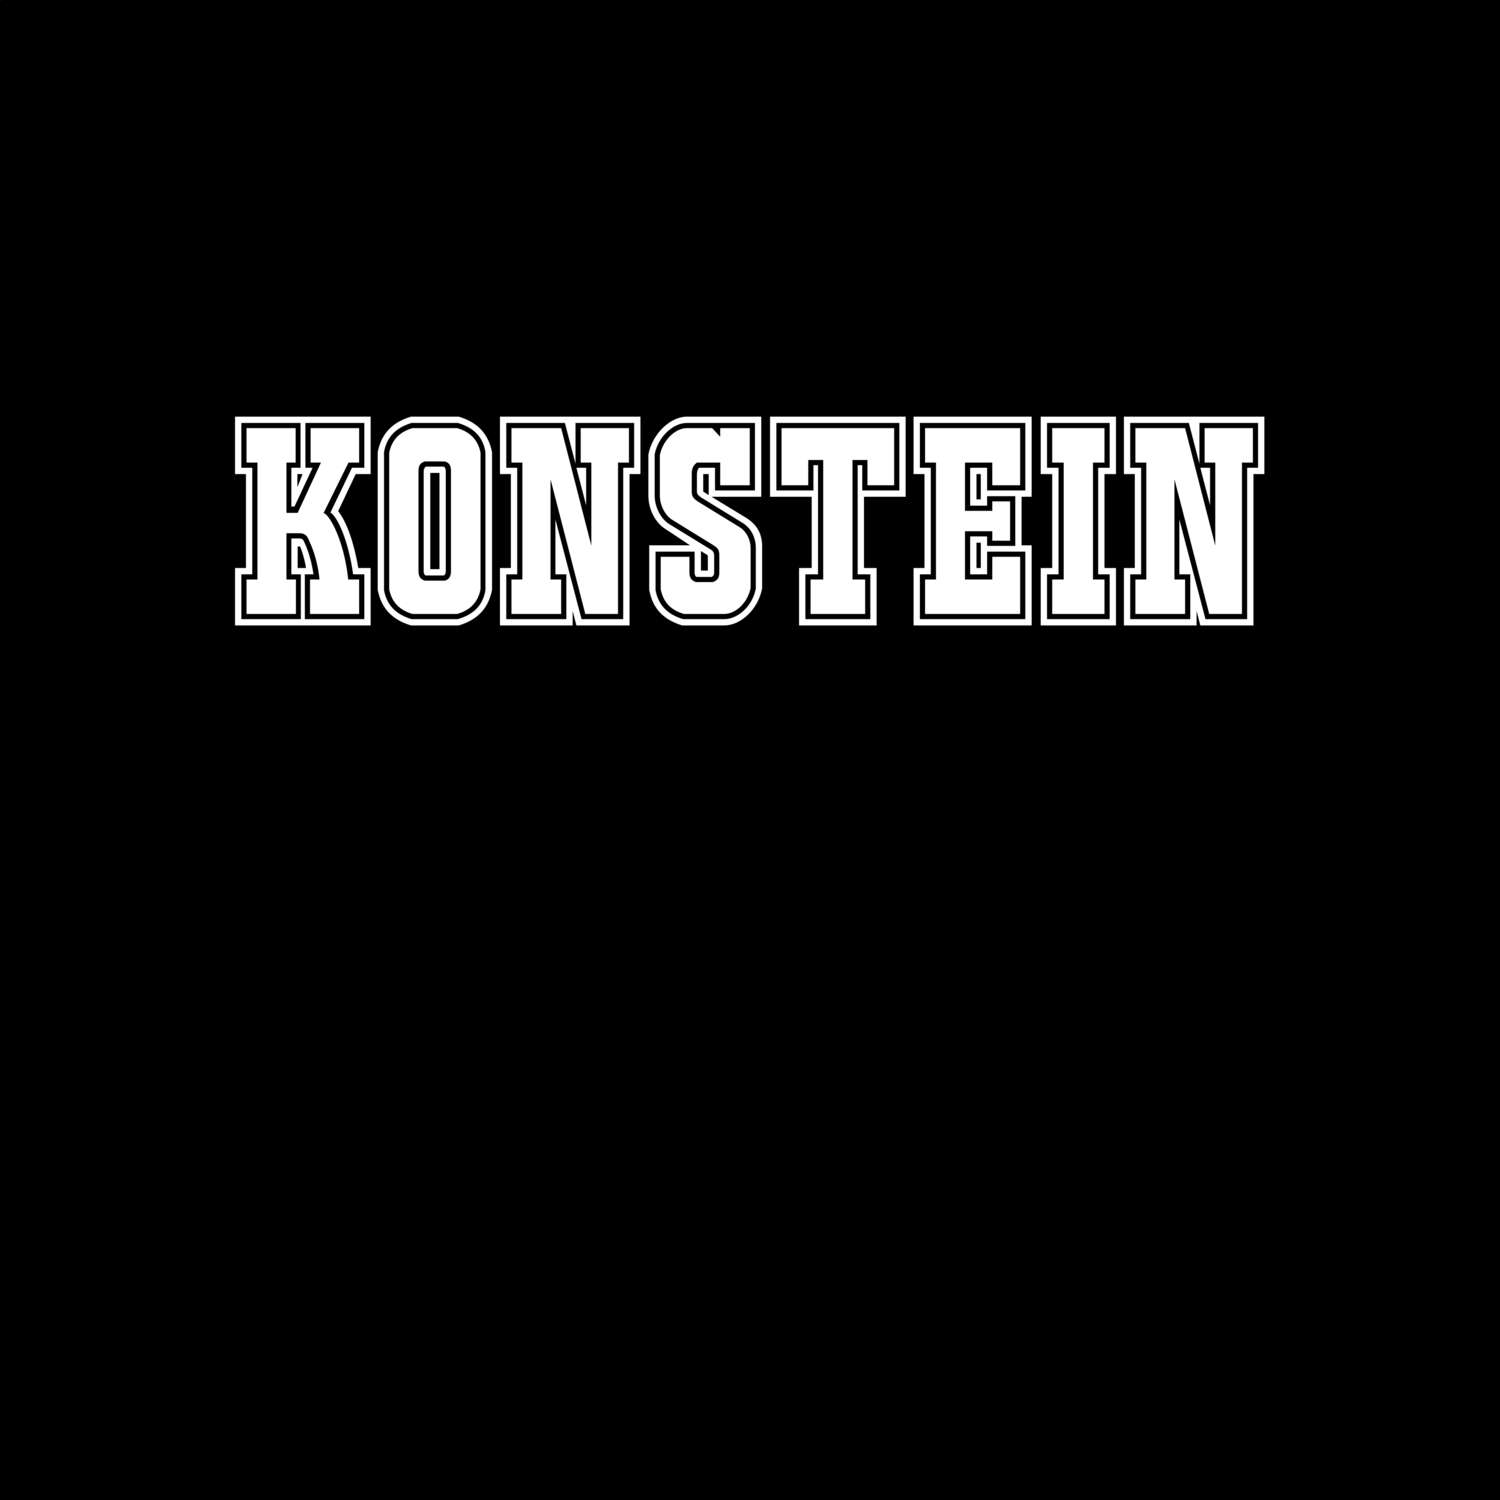 Konstein T-Shirt »Classic«